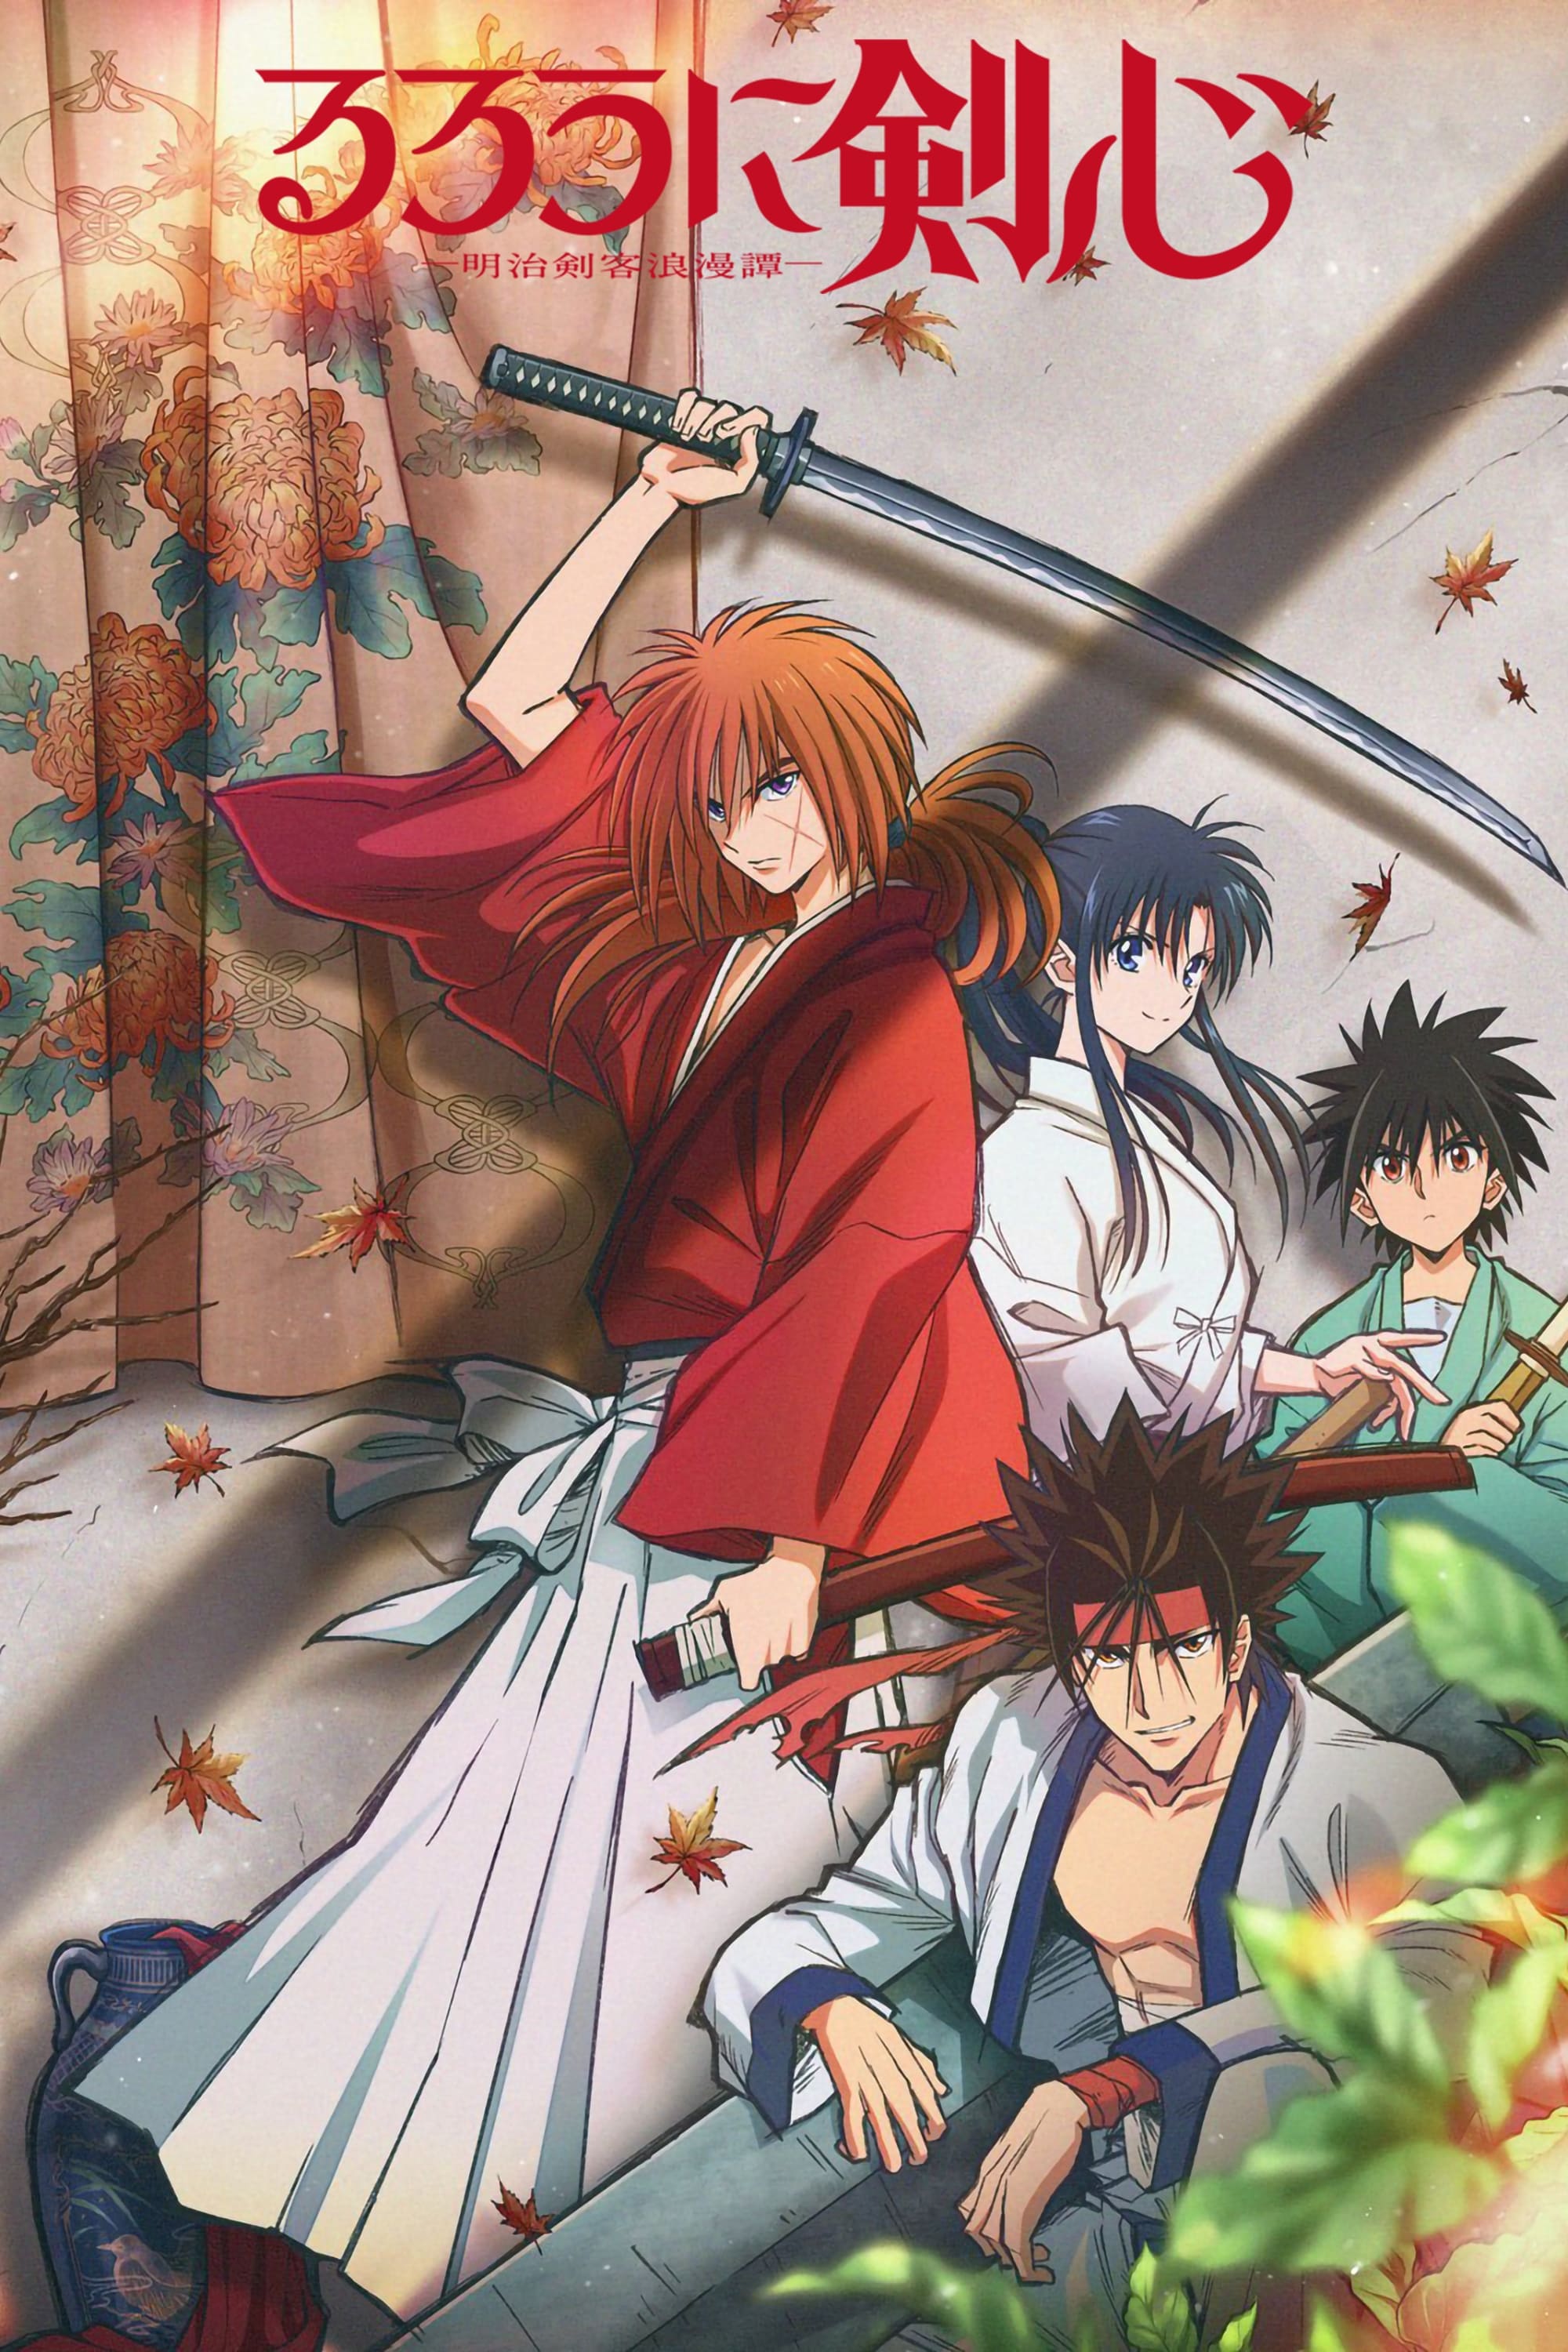 Assistir Rurouni Kenshin